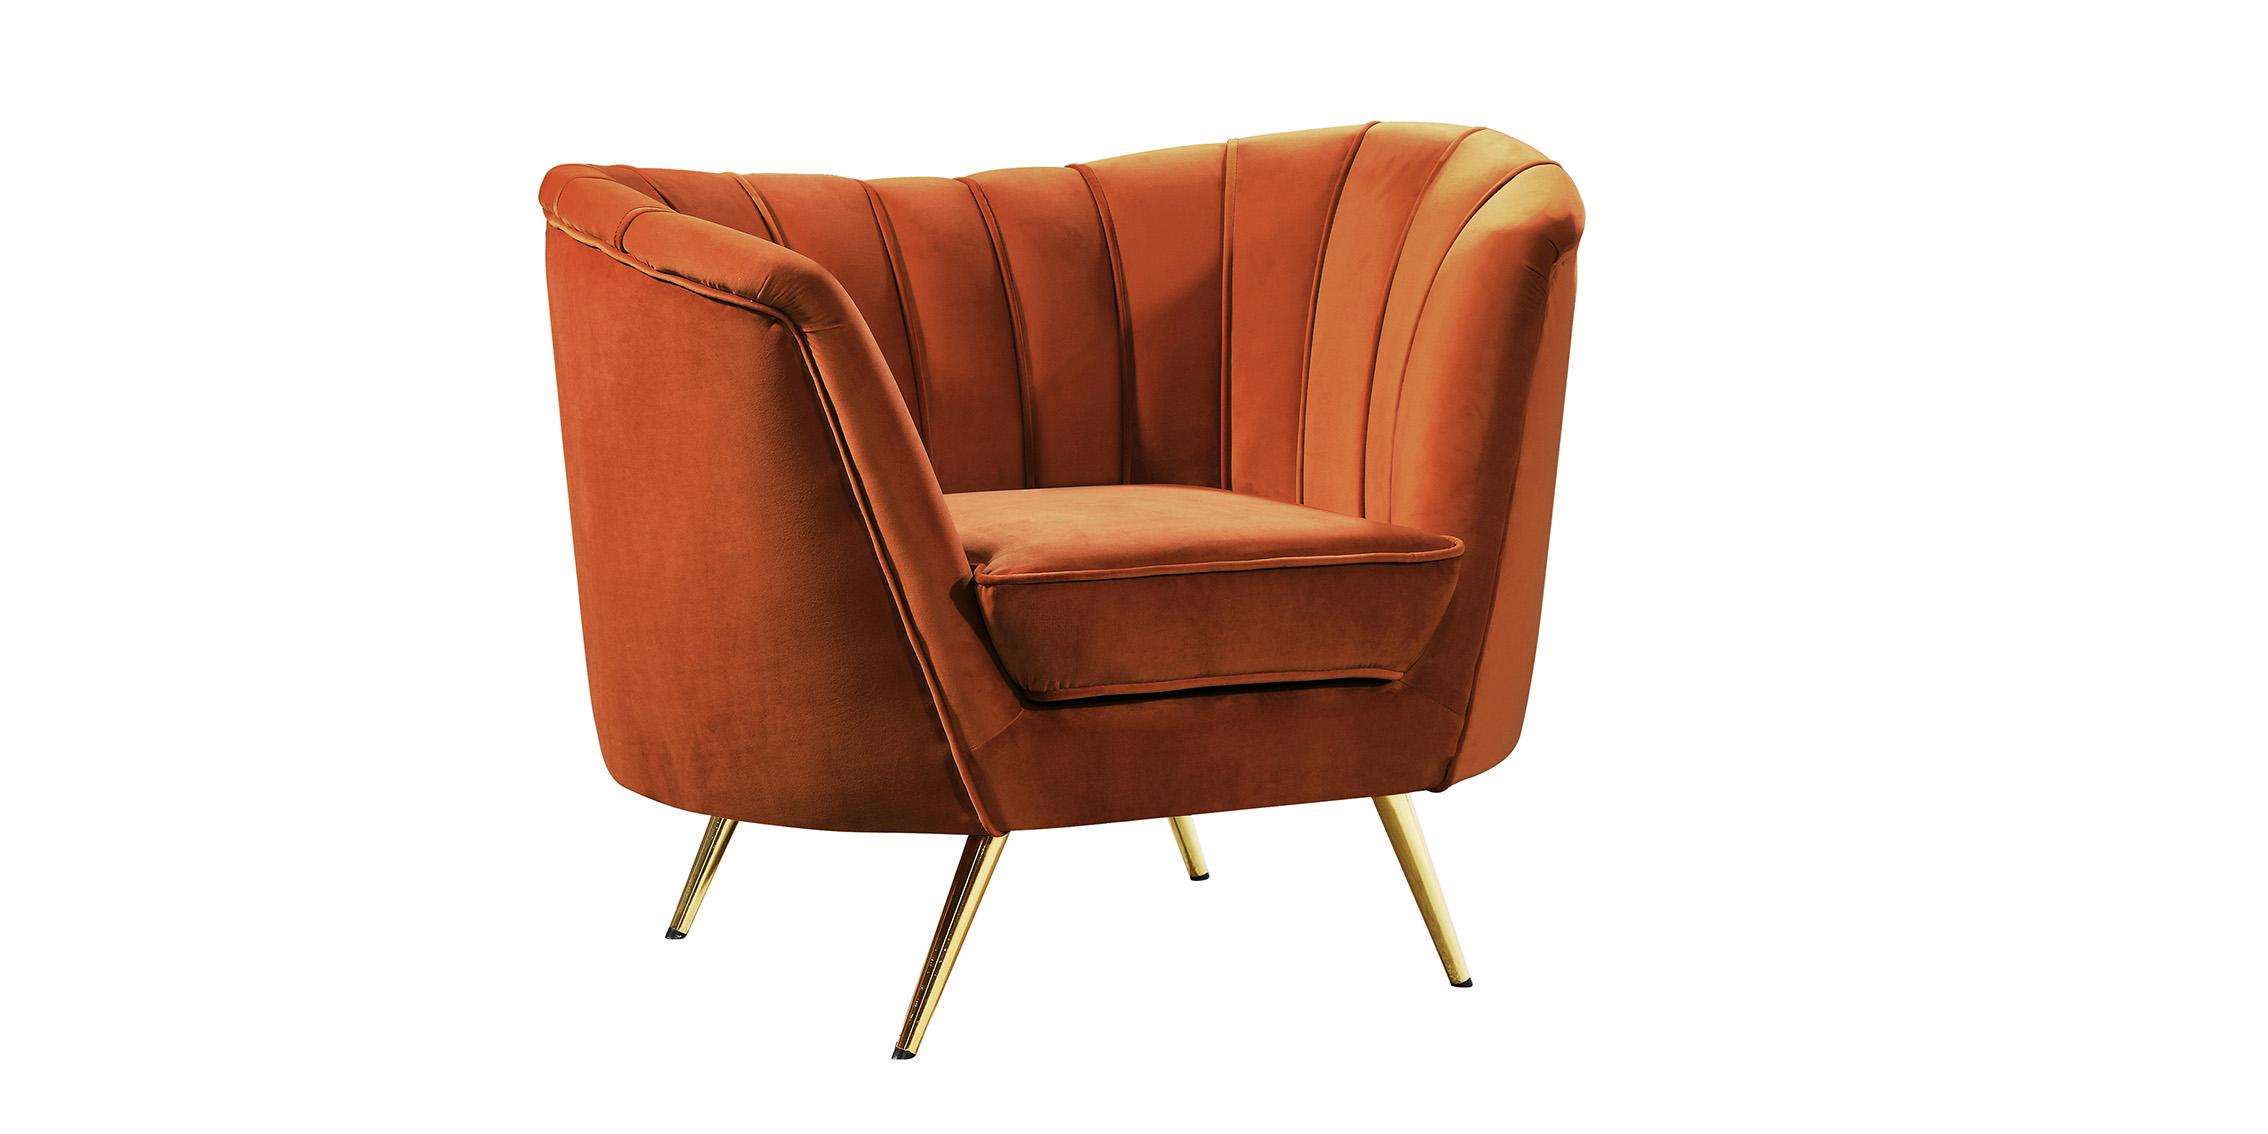 Contemporary, Modern Arm Chair Margo 622Cognac-C 622Cognac-C in Orange Velvet